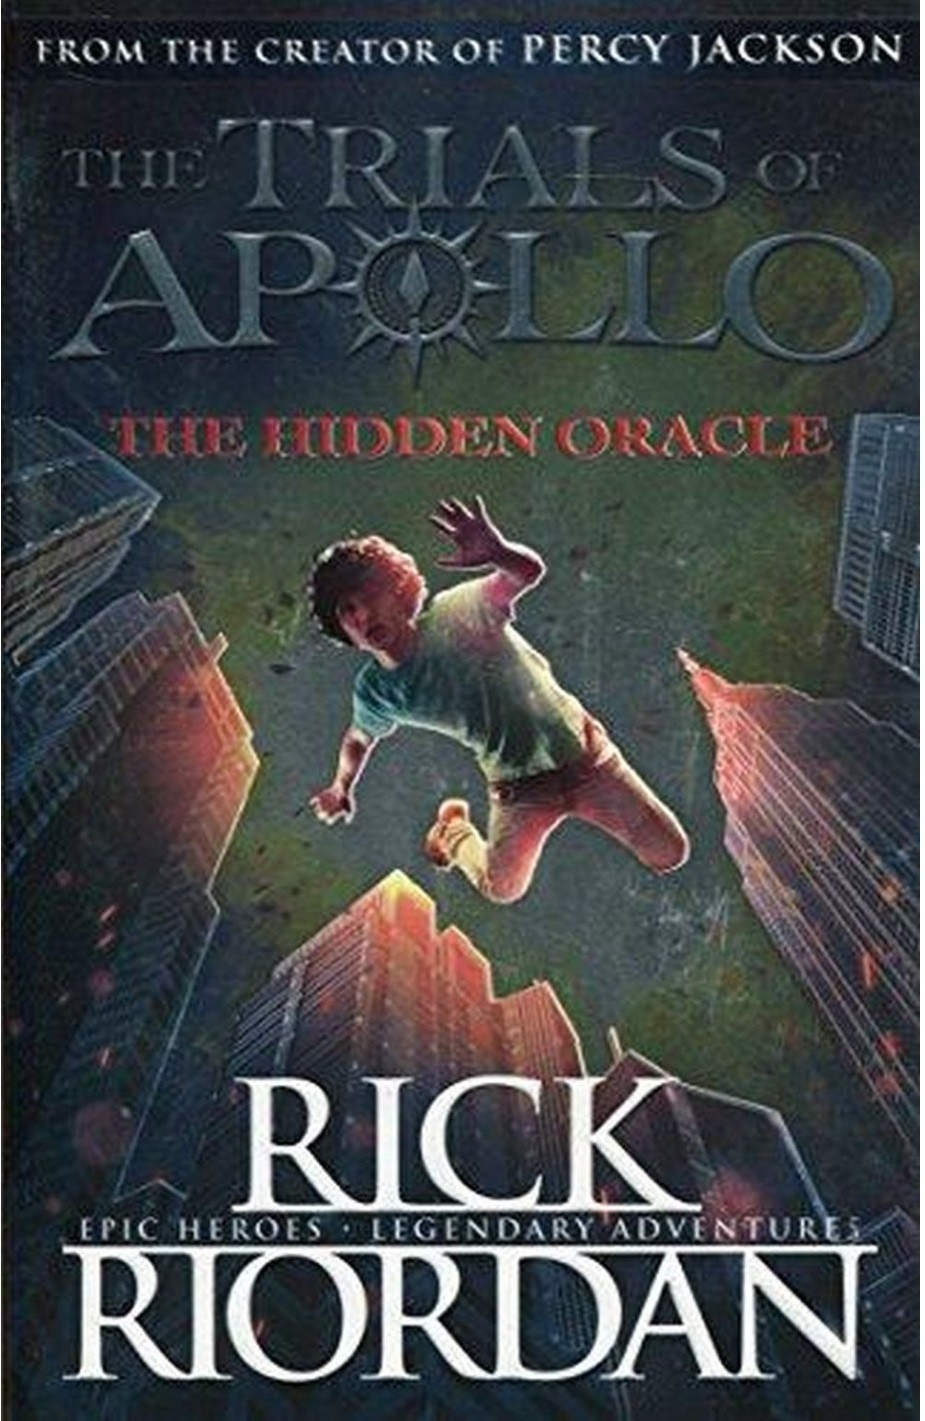 The trials of Apollo: The hidden oracle 1